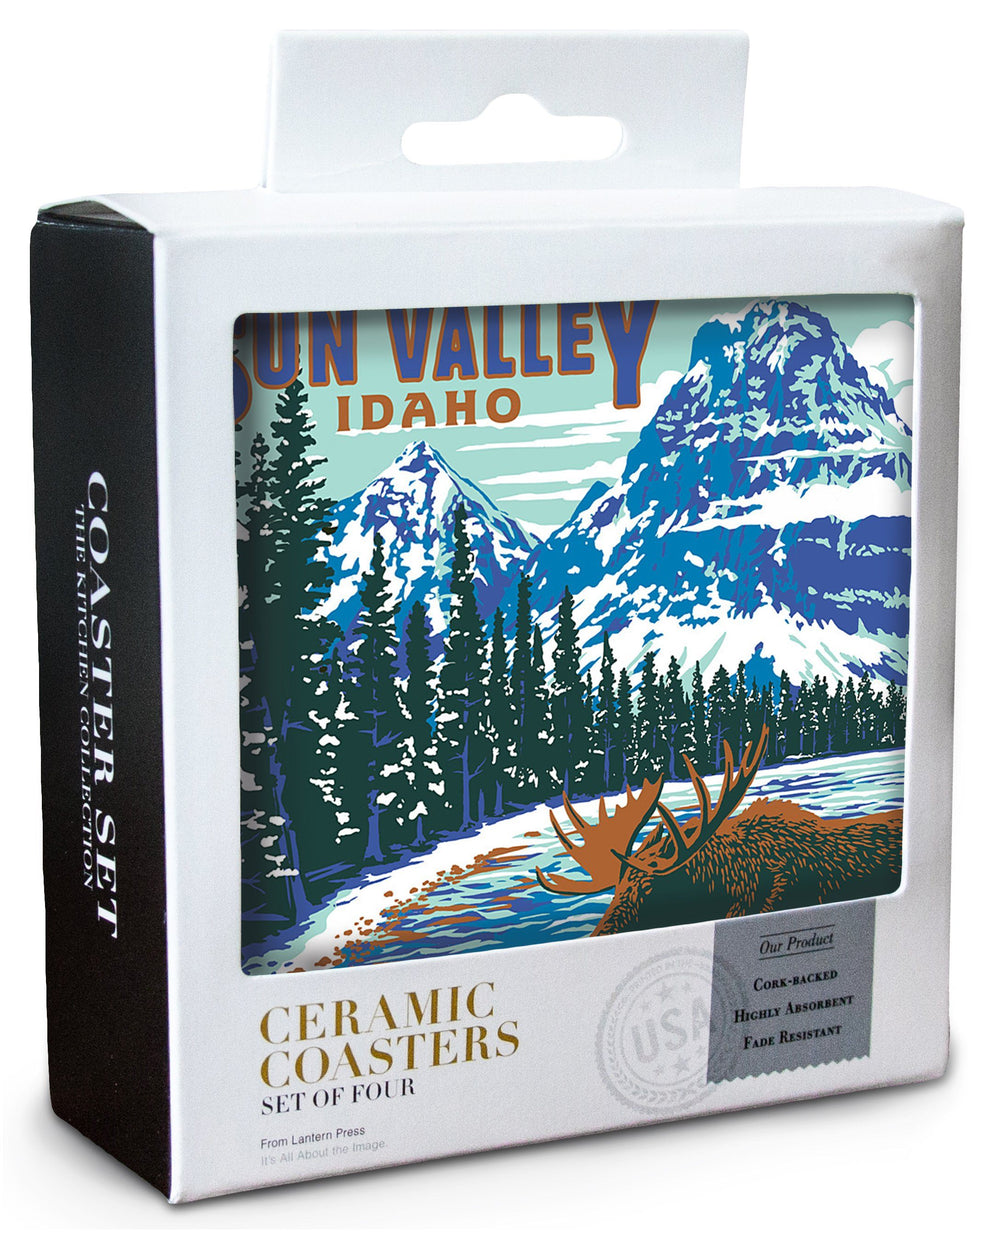 Sun Valley, Idaho, Explorer Series, Blue, Lantern Press Artwork, Coaster Set Coasters Lantern Press 